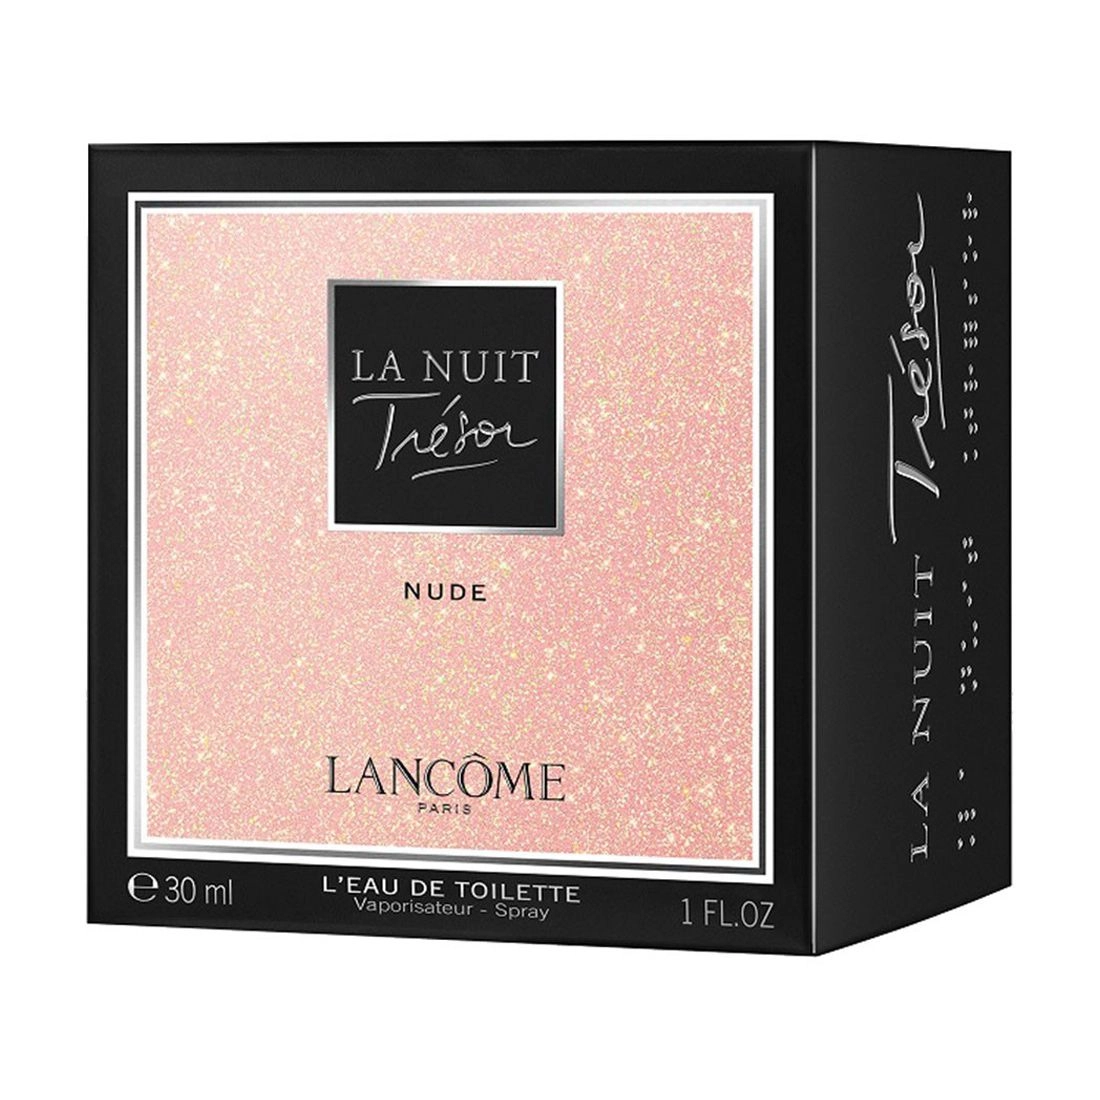 Lancome La Nuit Tresor Nude Туалетная вода женская, 30 мл - фото N2